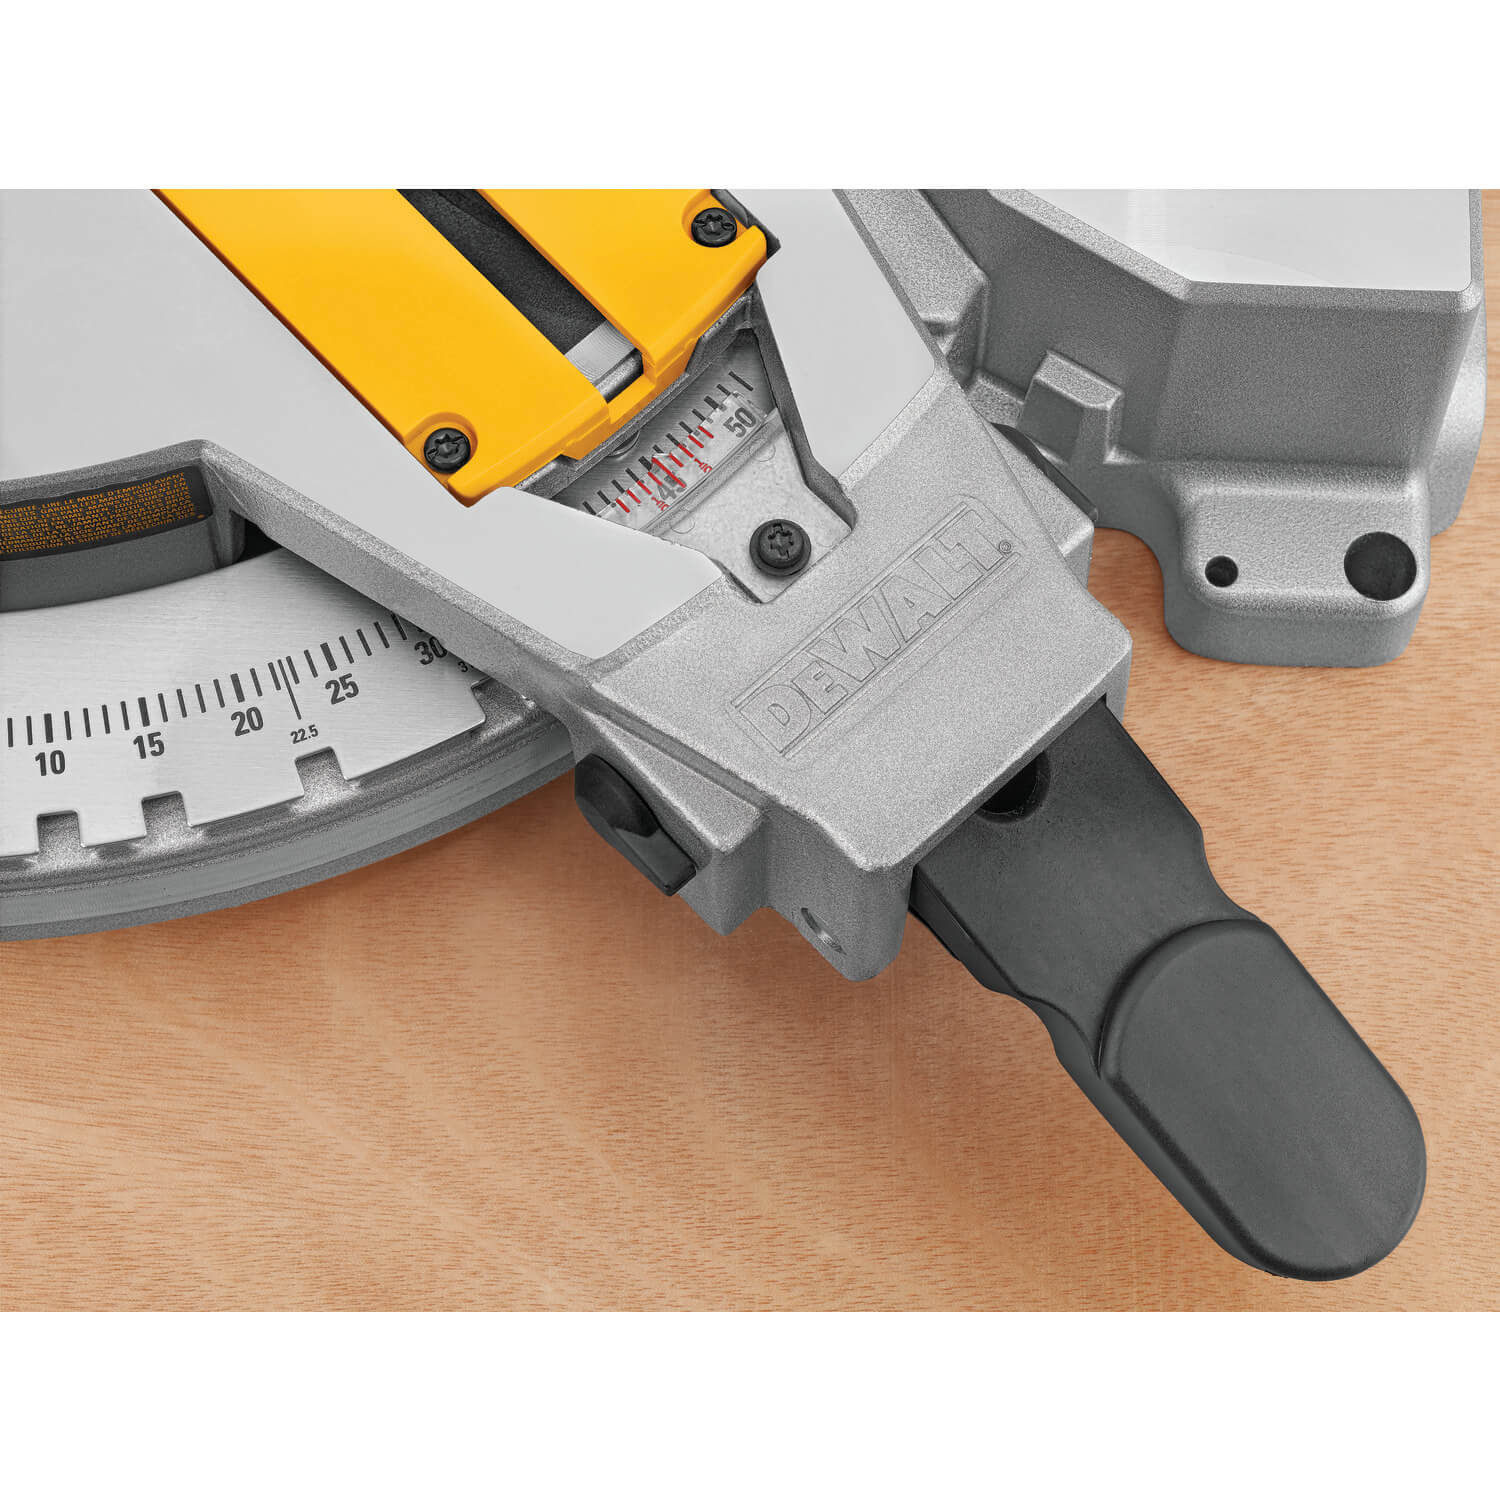 DEWALT DWS713 10 in. Portable Compound Miter Saw - wise-line-tools